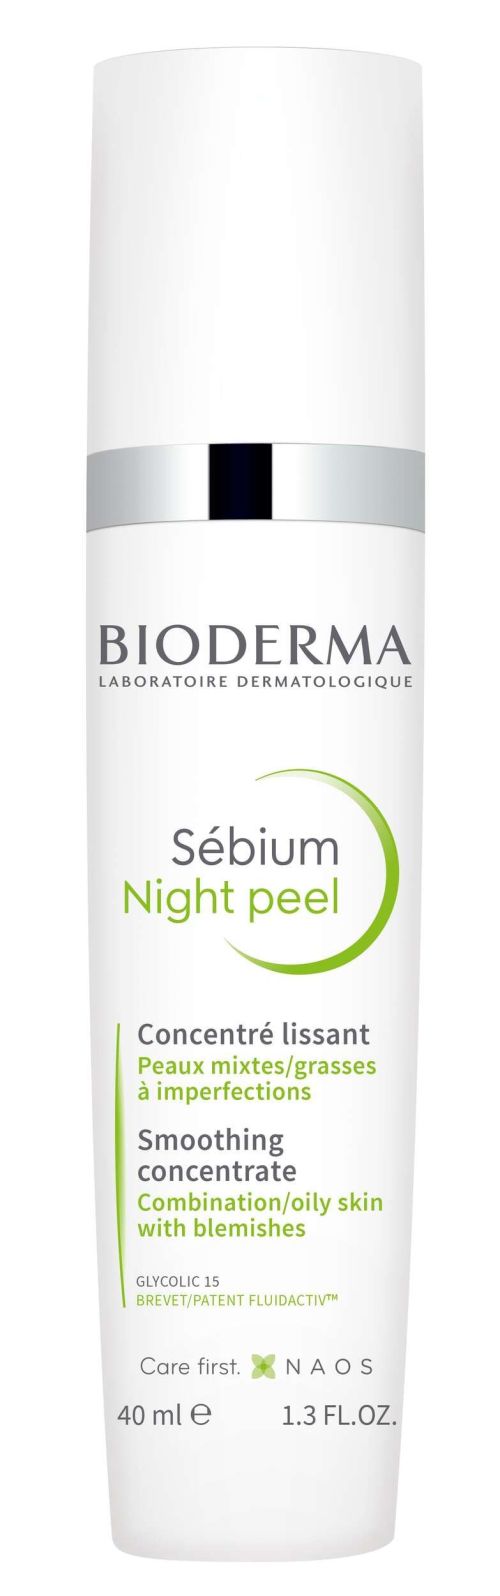 978275333 - Bioderma Sebium Night Peel Gel concentrato levigante 40ml - 4703724_2.jpg